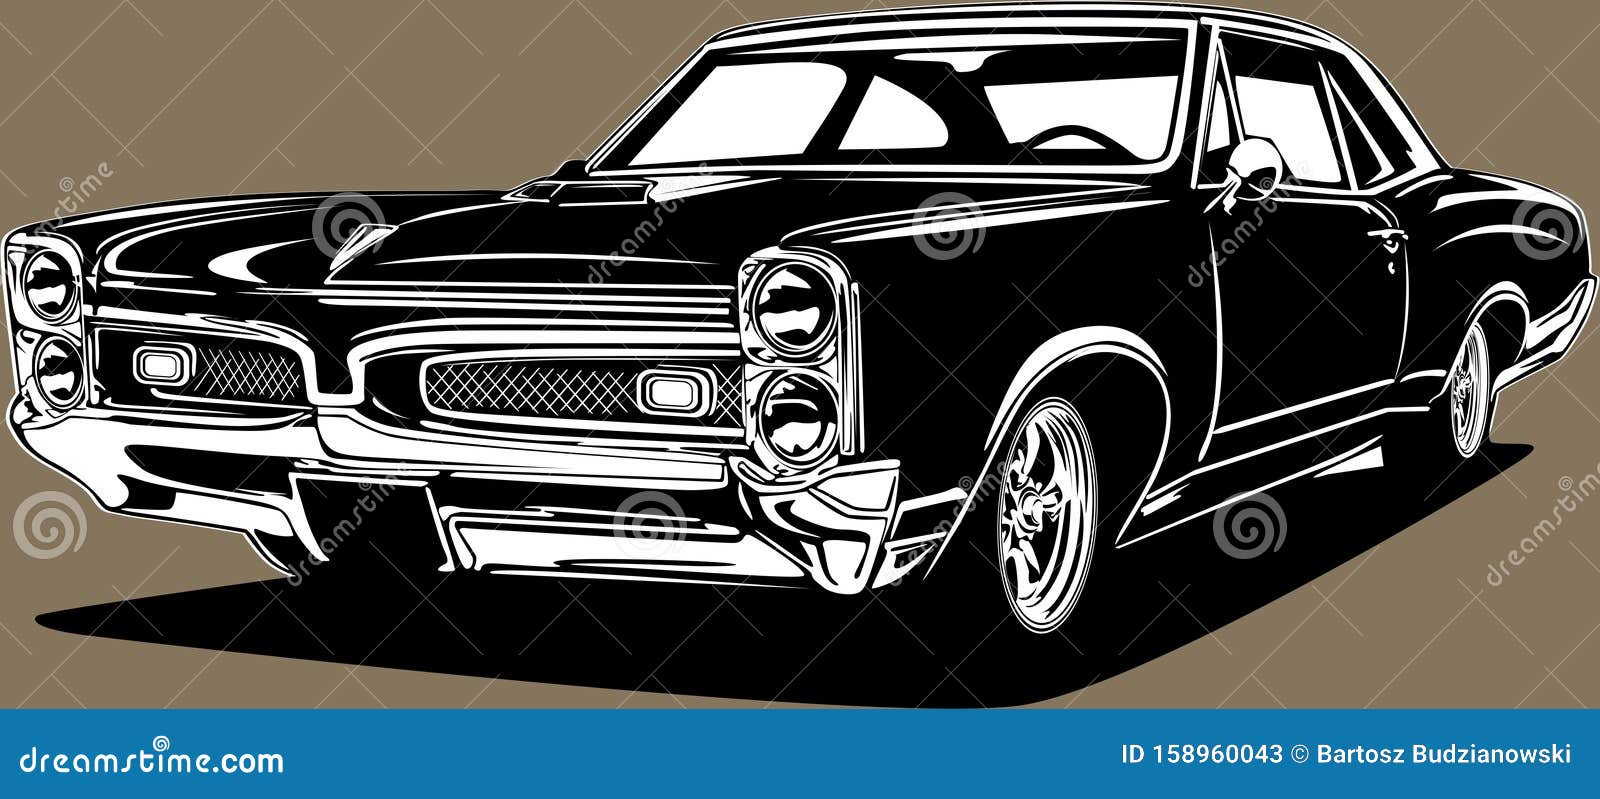 classic american vintage retro icon of muscle car pontiac gto